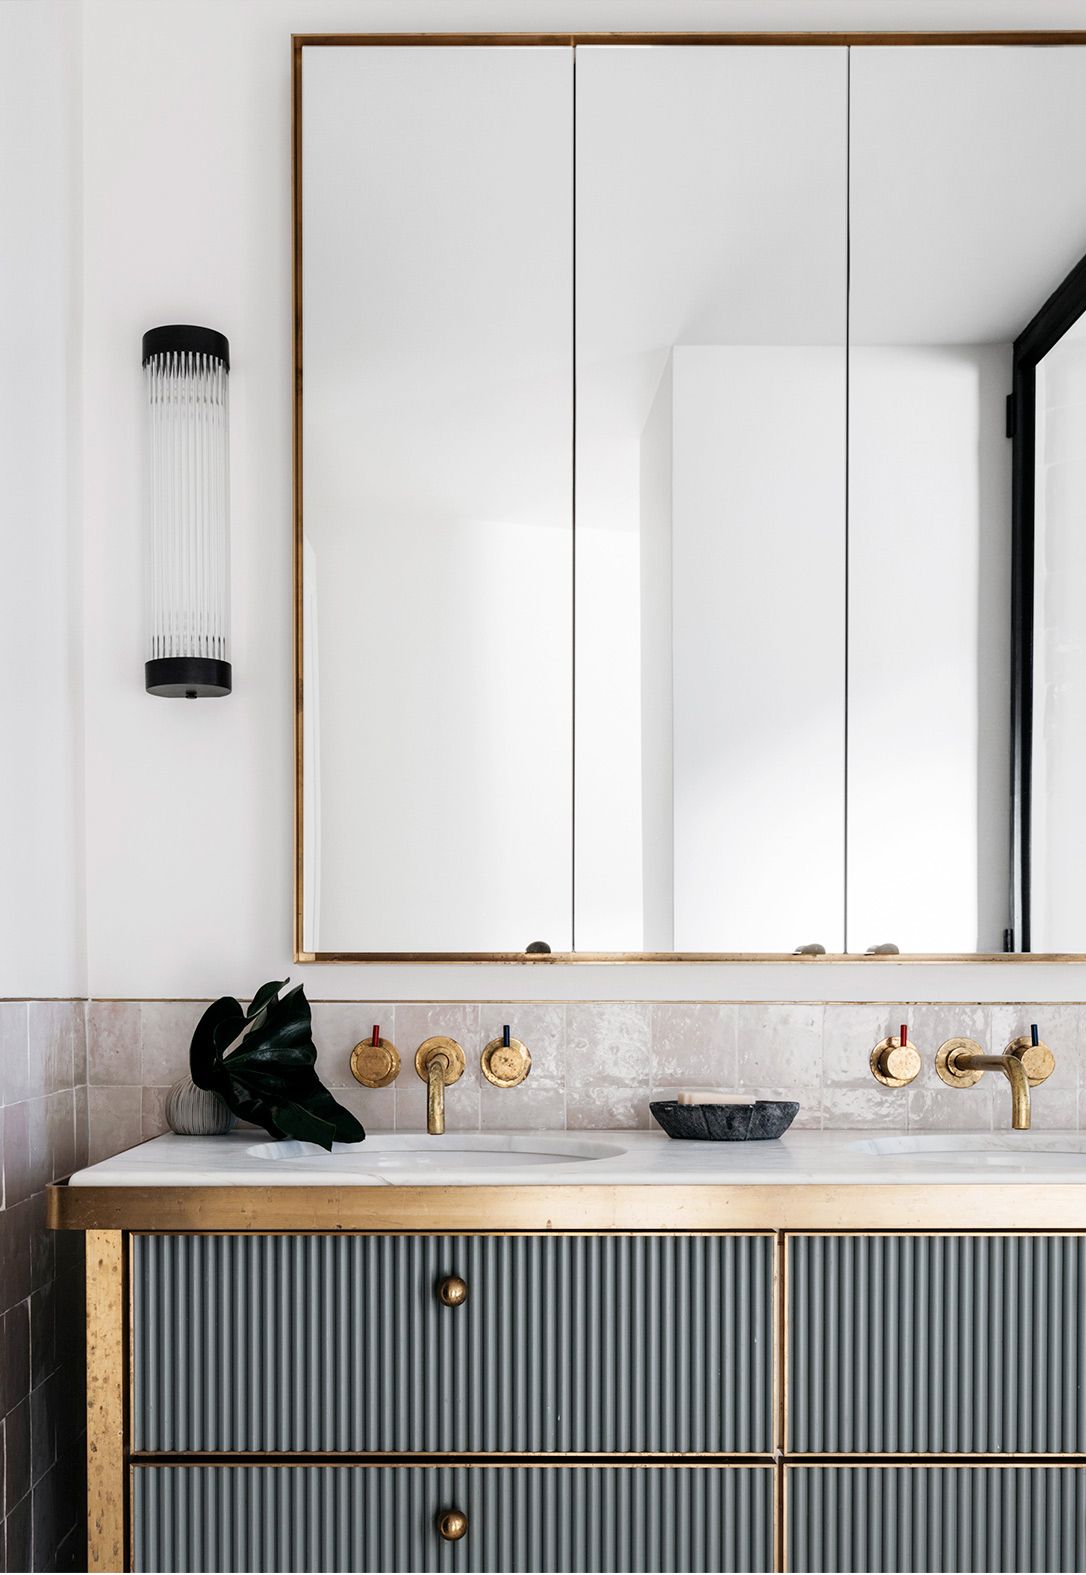 60 Best Bathroom Designs Photos Of Beautiful Bathroom